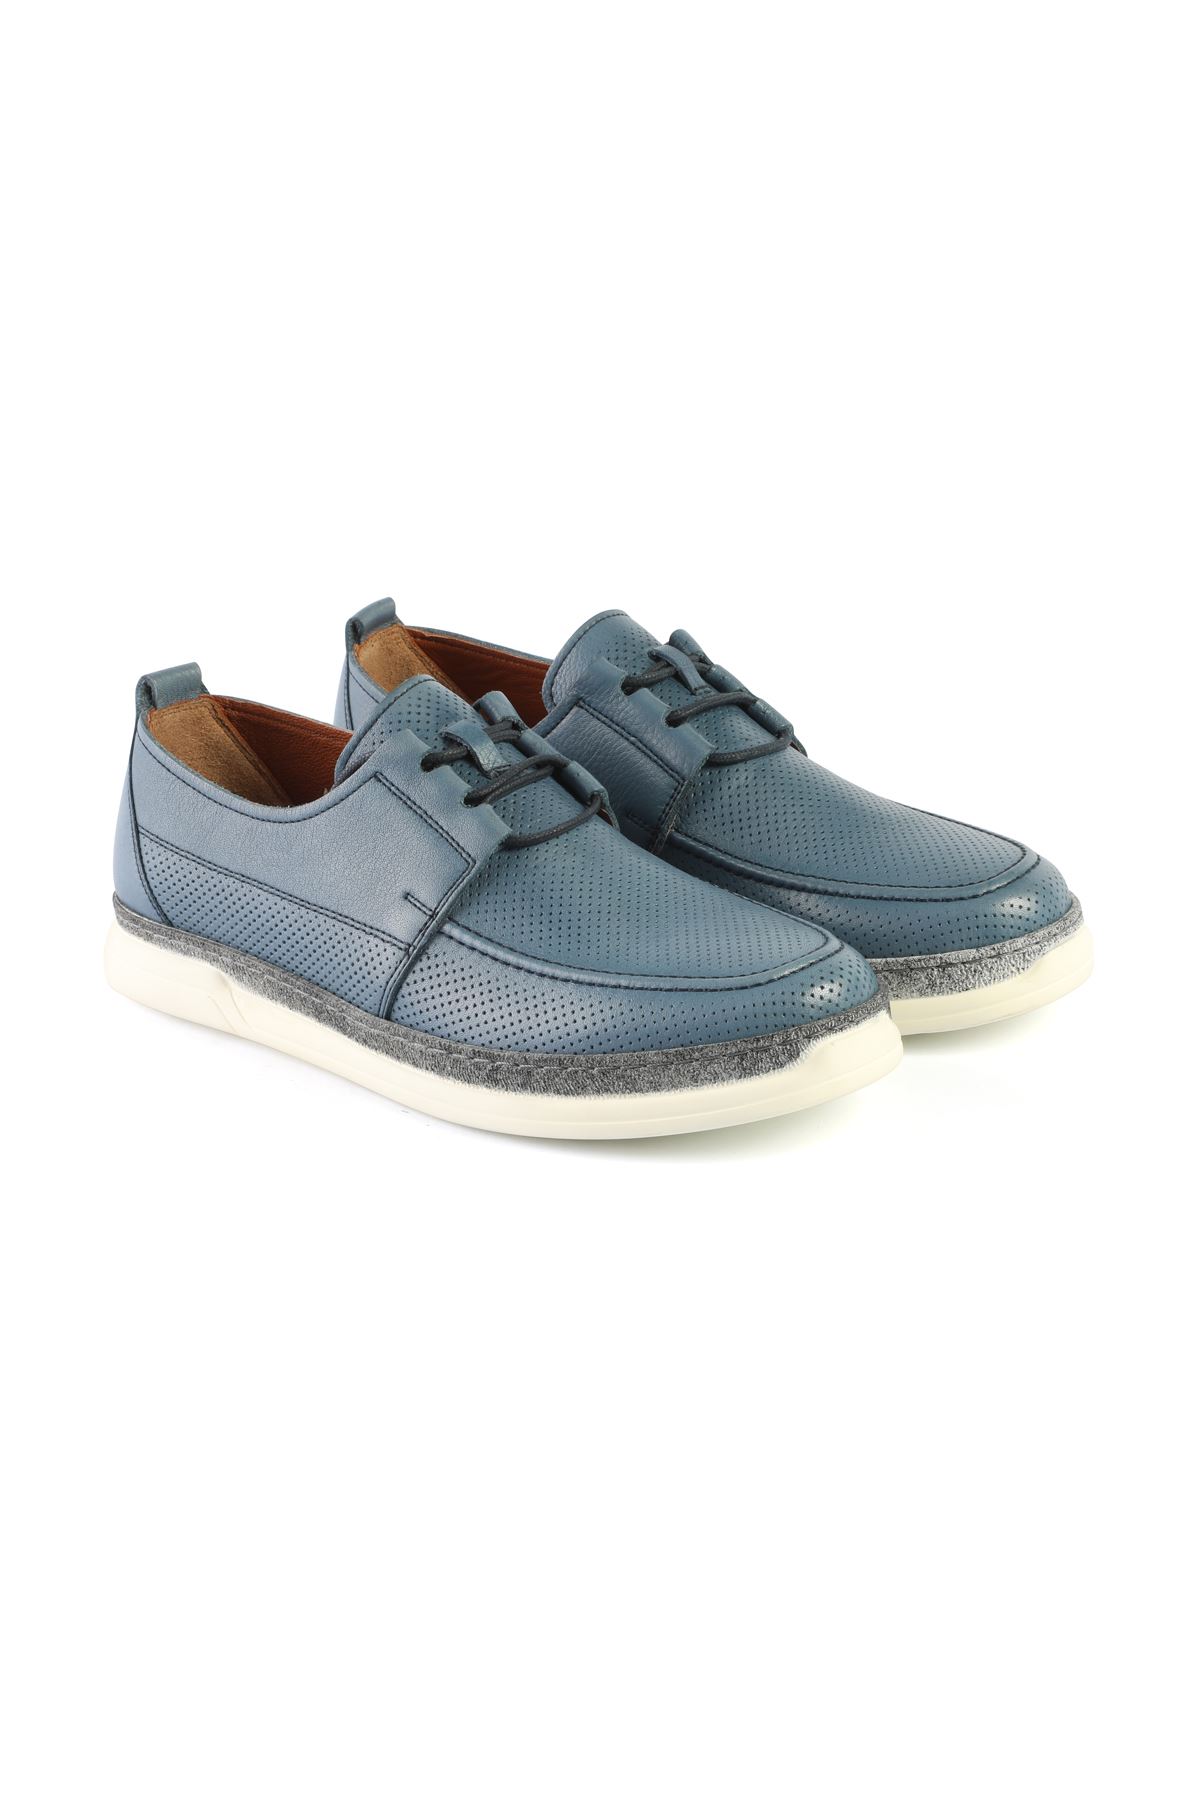 Libero L3418 Blue Loafer Shoes